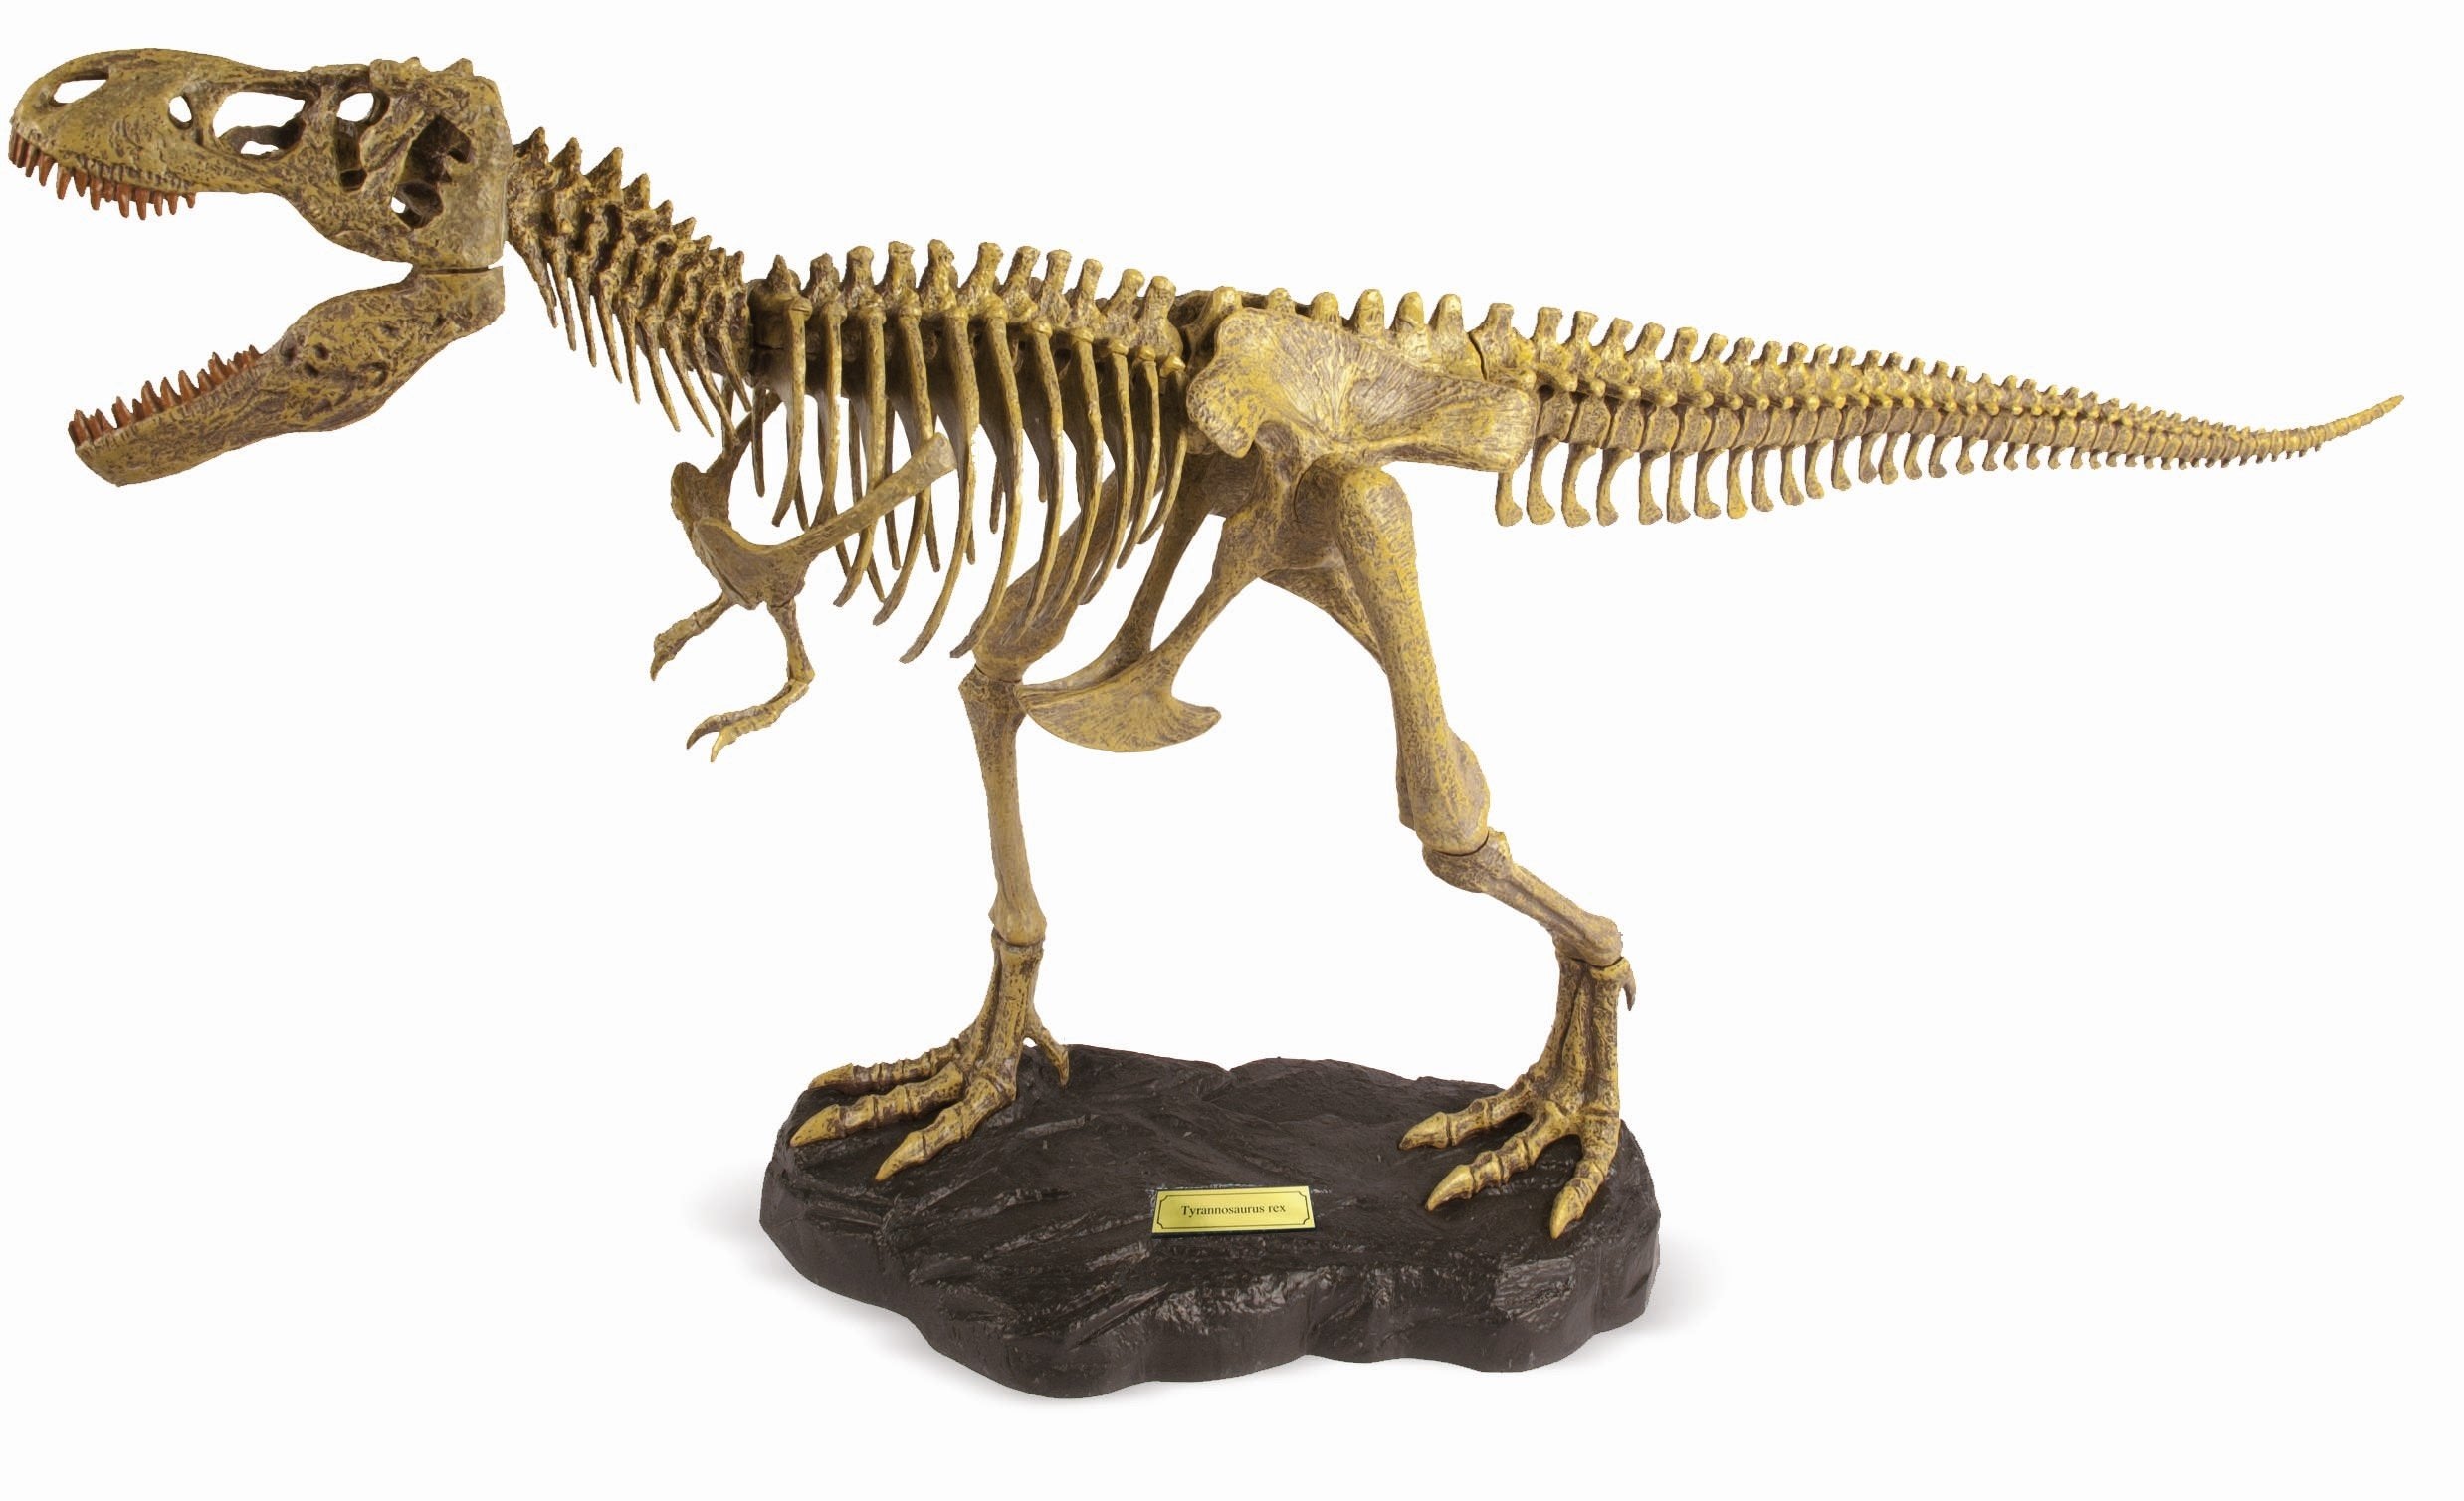 Dr. Steve Hunters Tyrannosaurus Rex Paleo Expeditions Full Model Skele